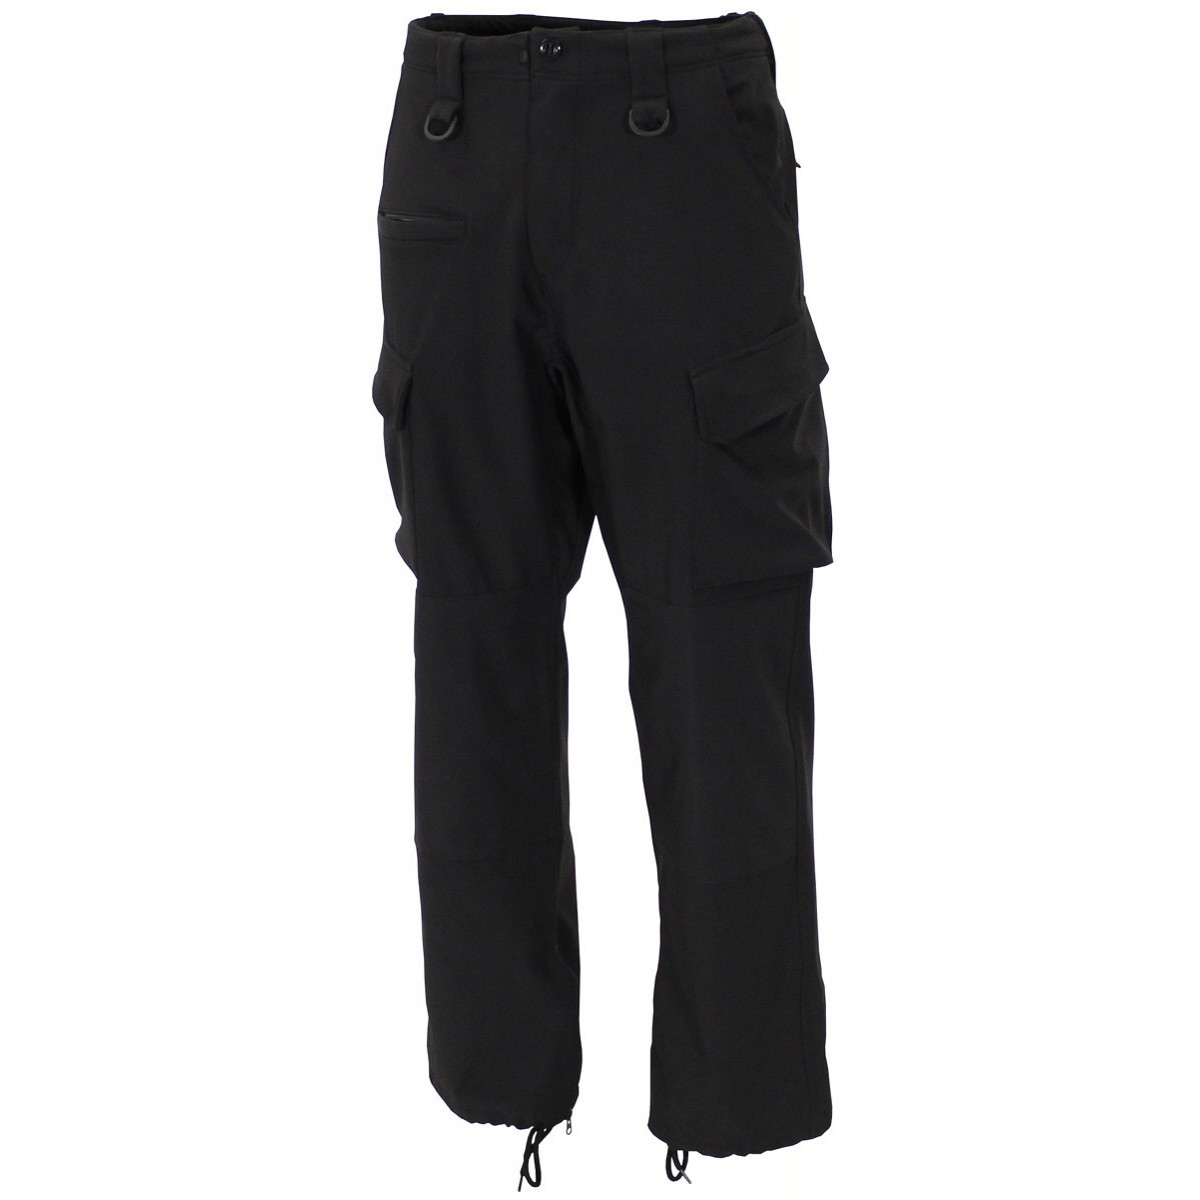 Kalhoty MFH Softshell Allround - černé, XL